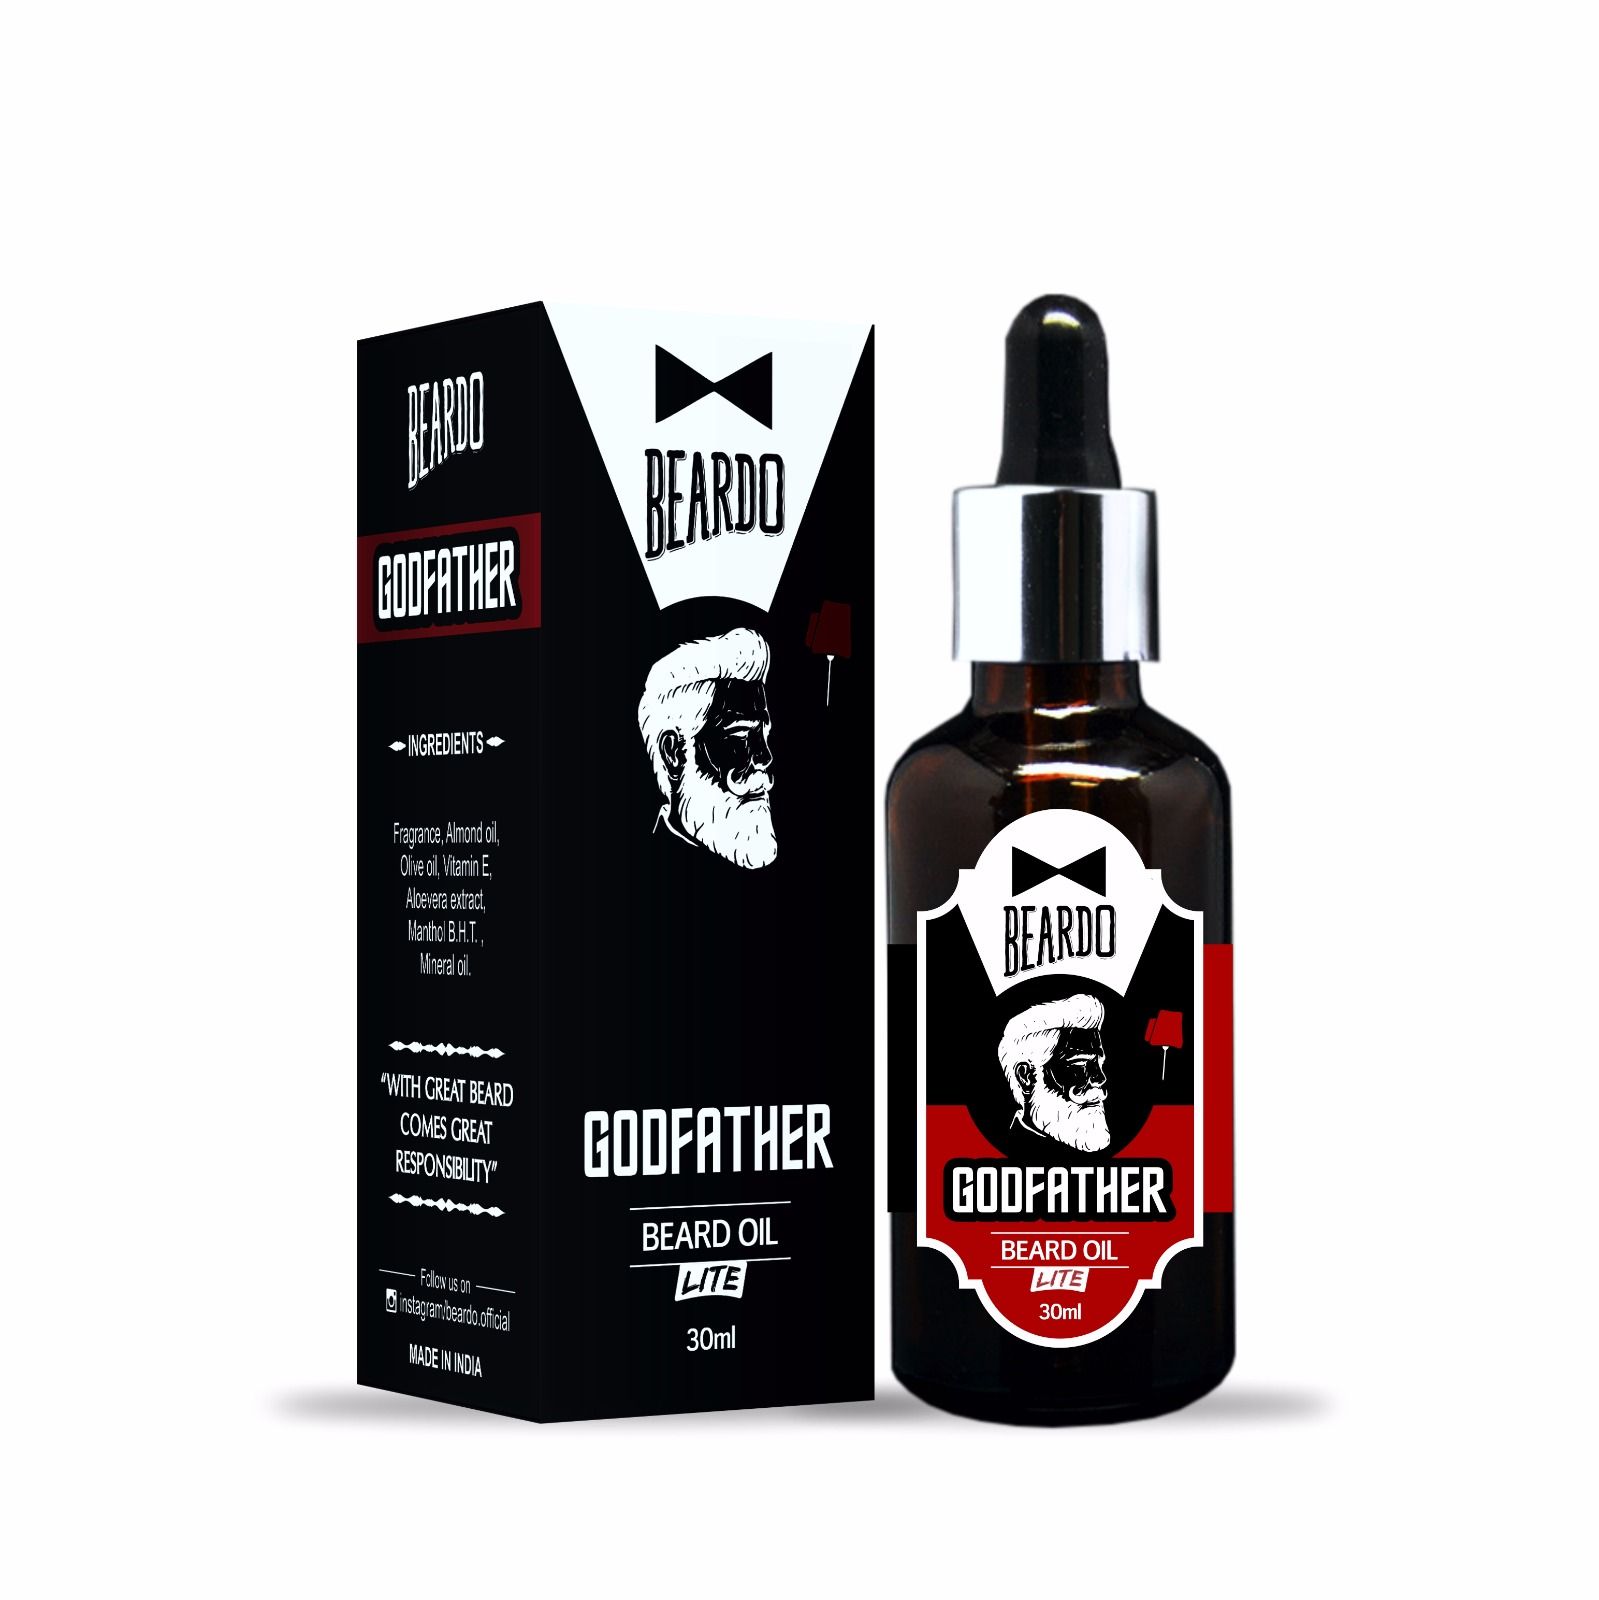 Beardo Godfather Beard Oil Lite